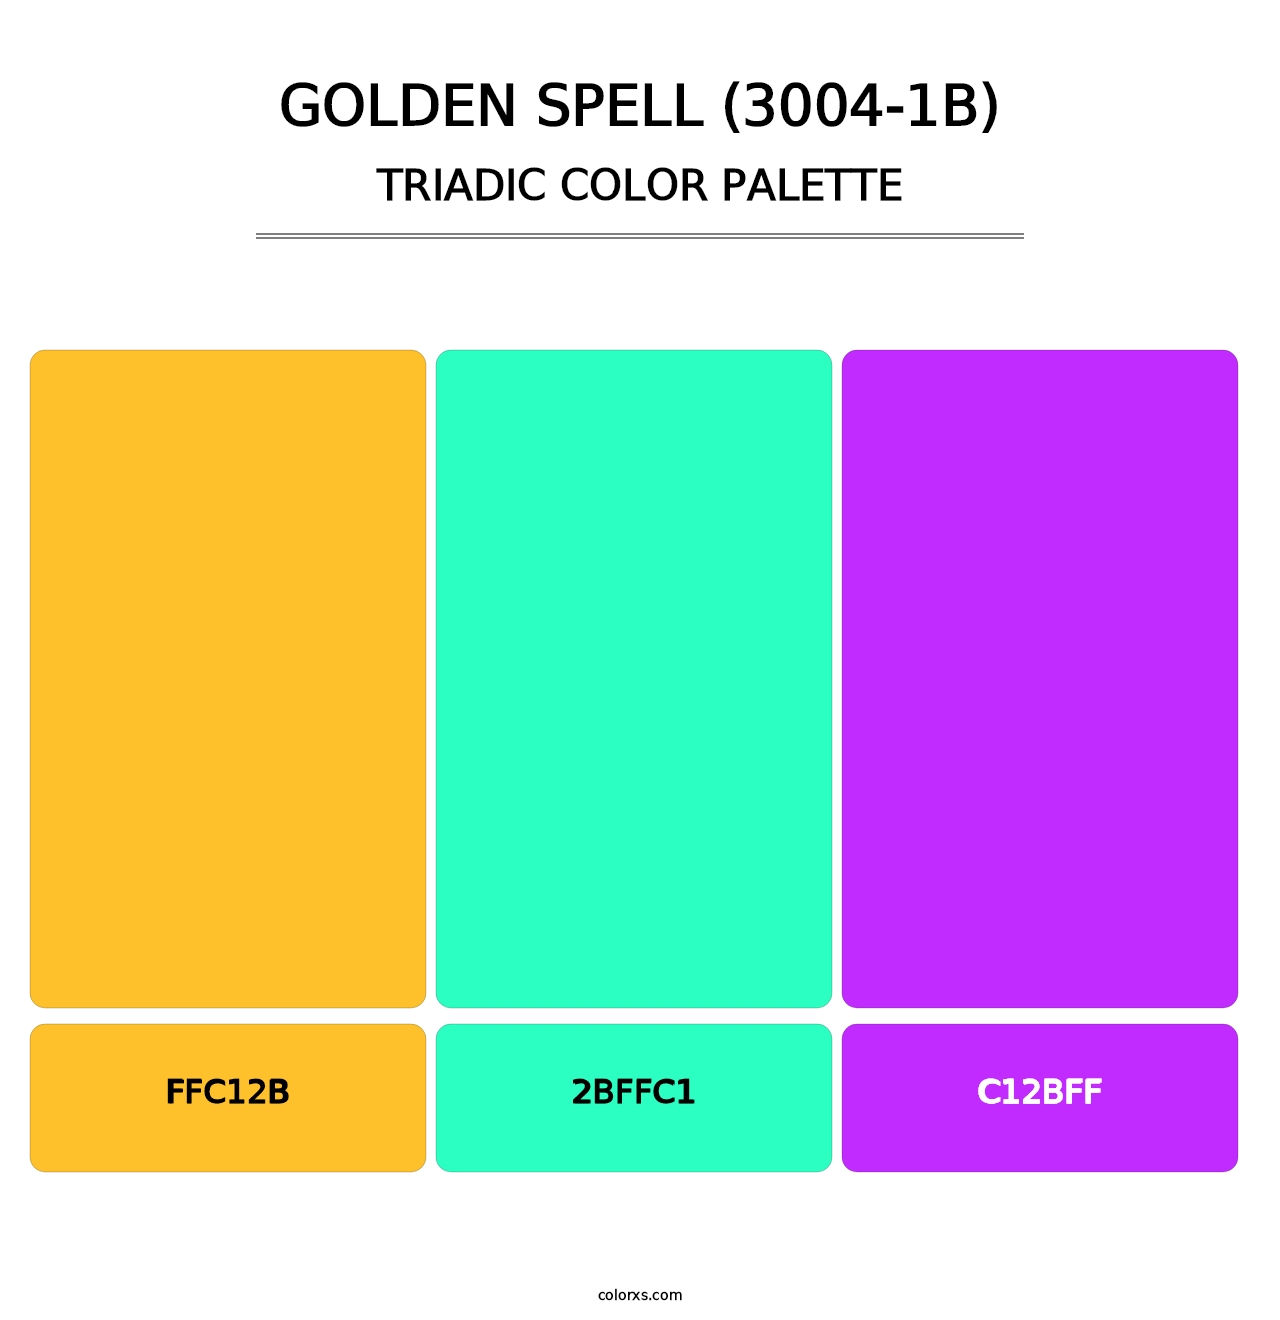 Golden Spell (3004-1B) - Triadic Color Palette